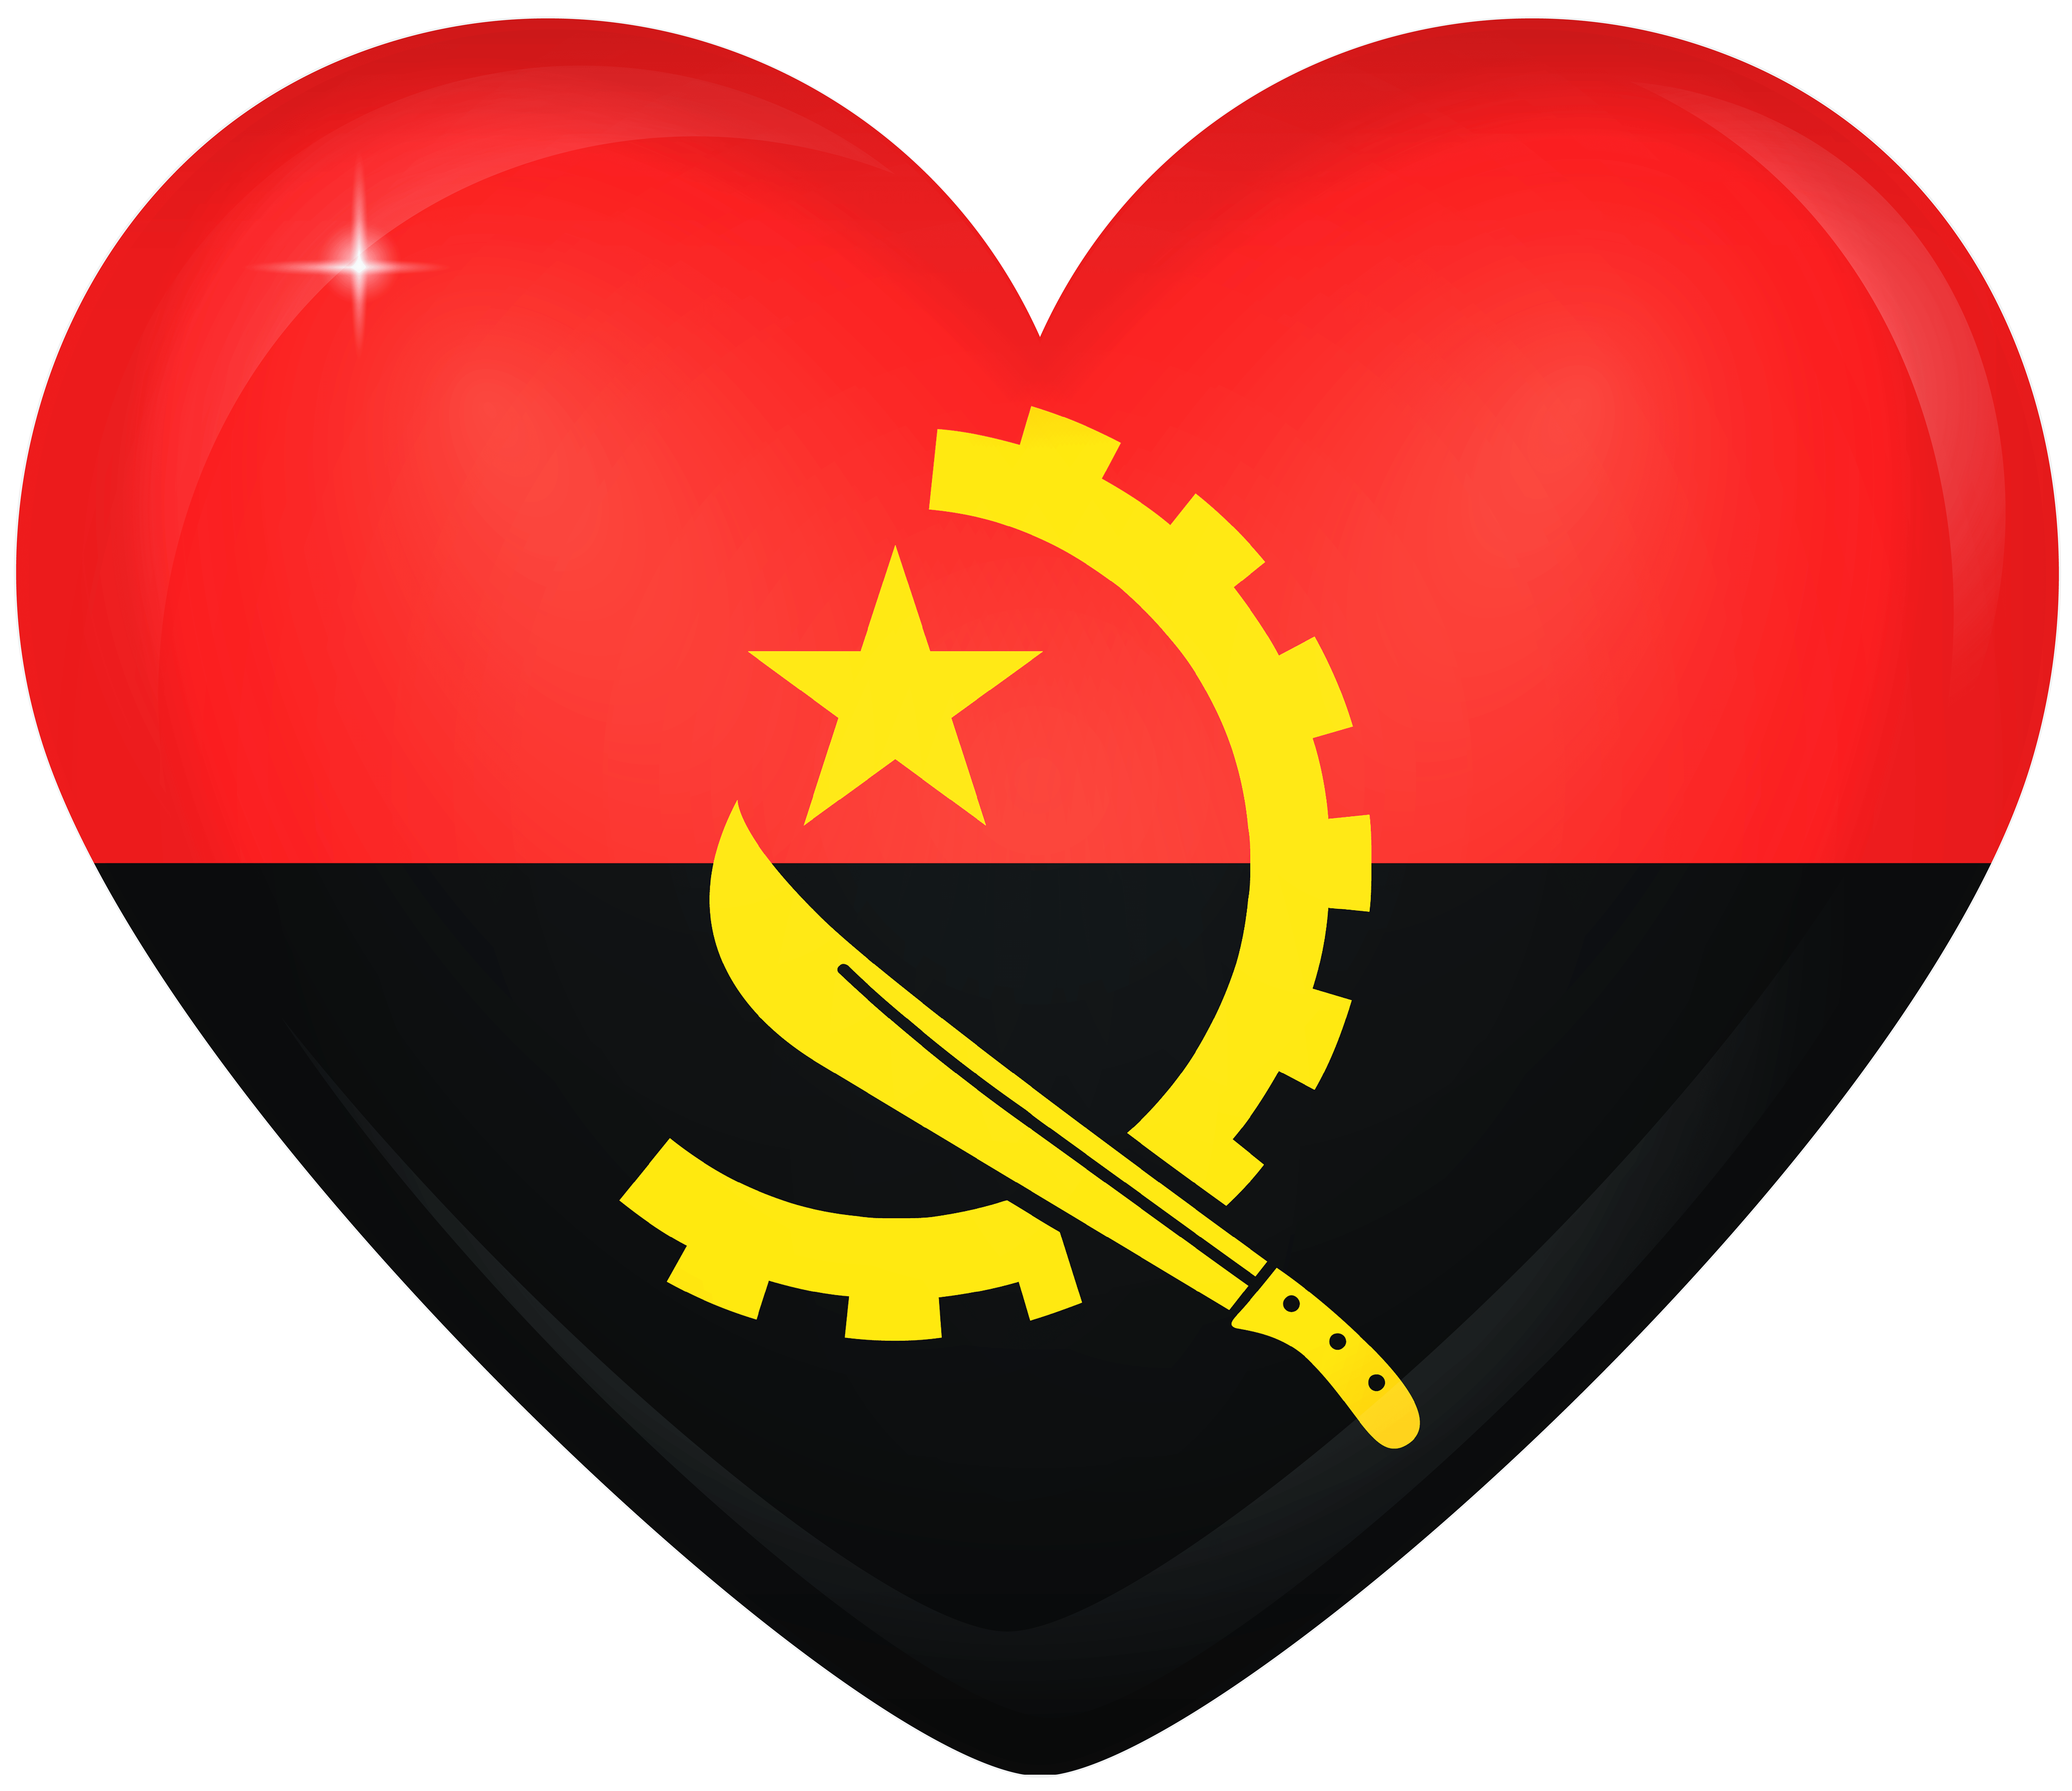 Angola Large Heart Flag Quality